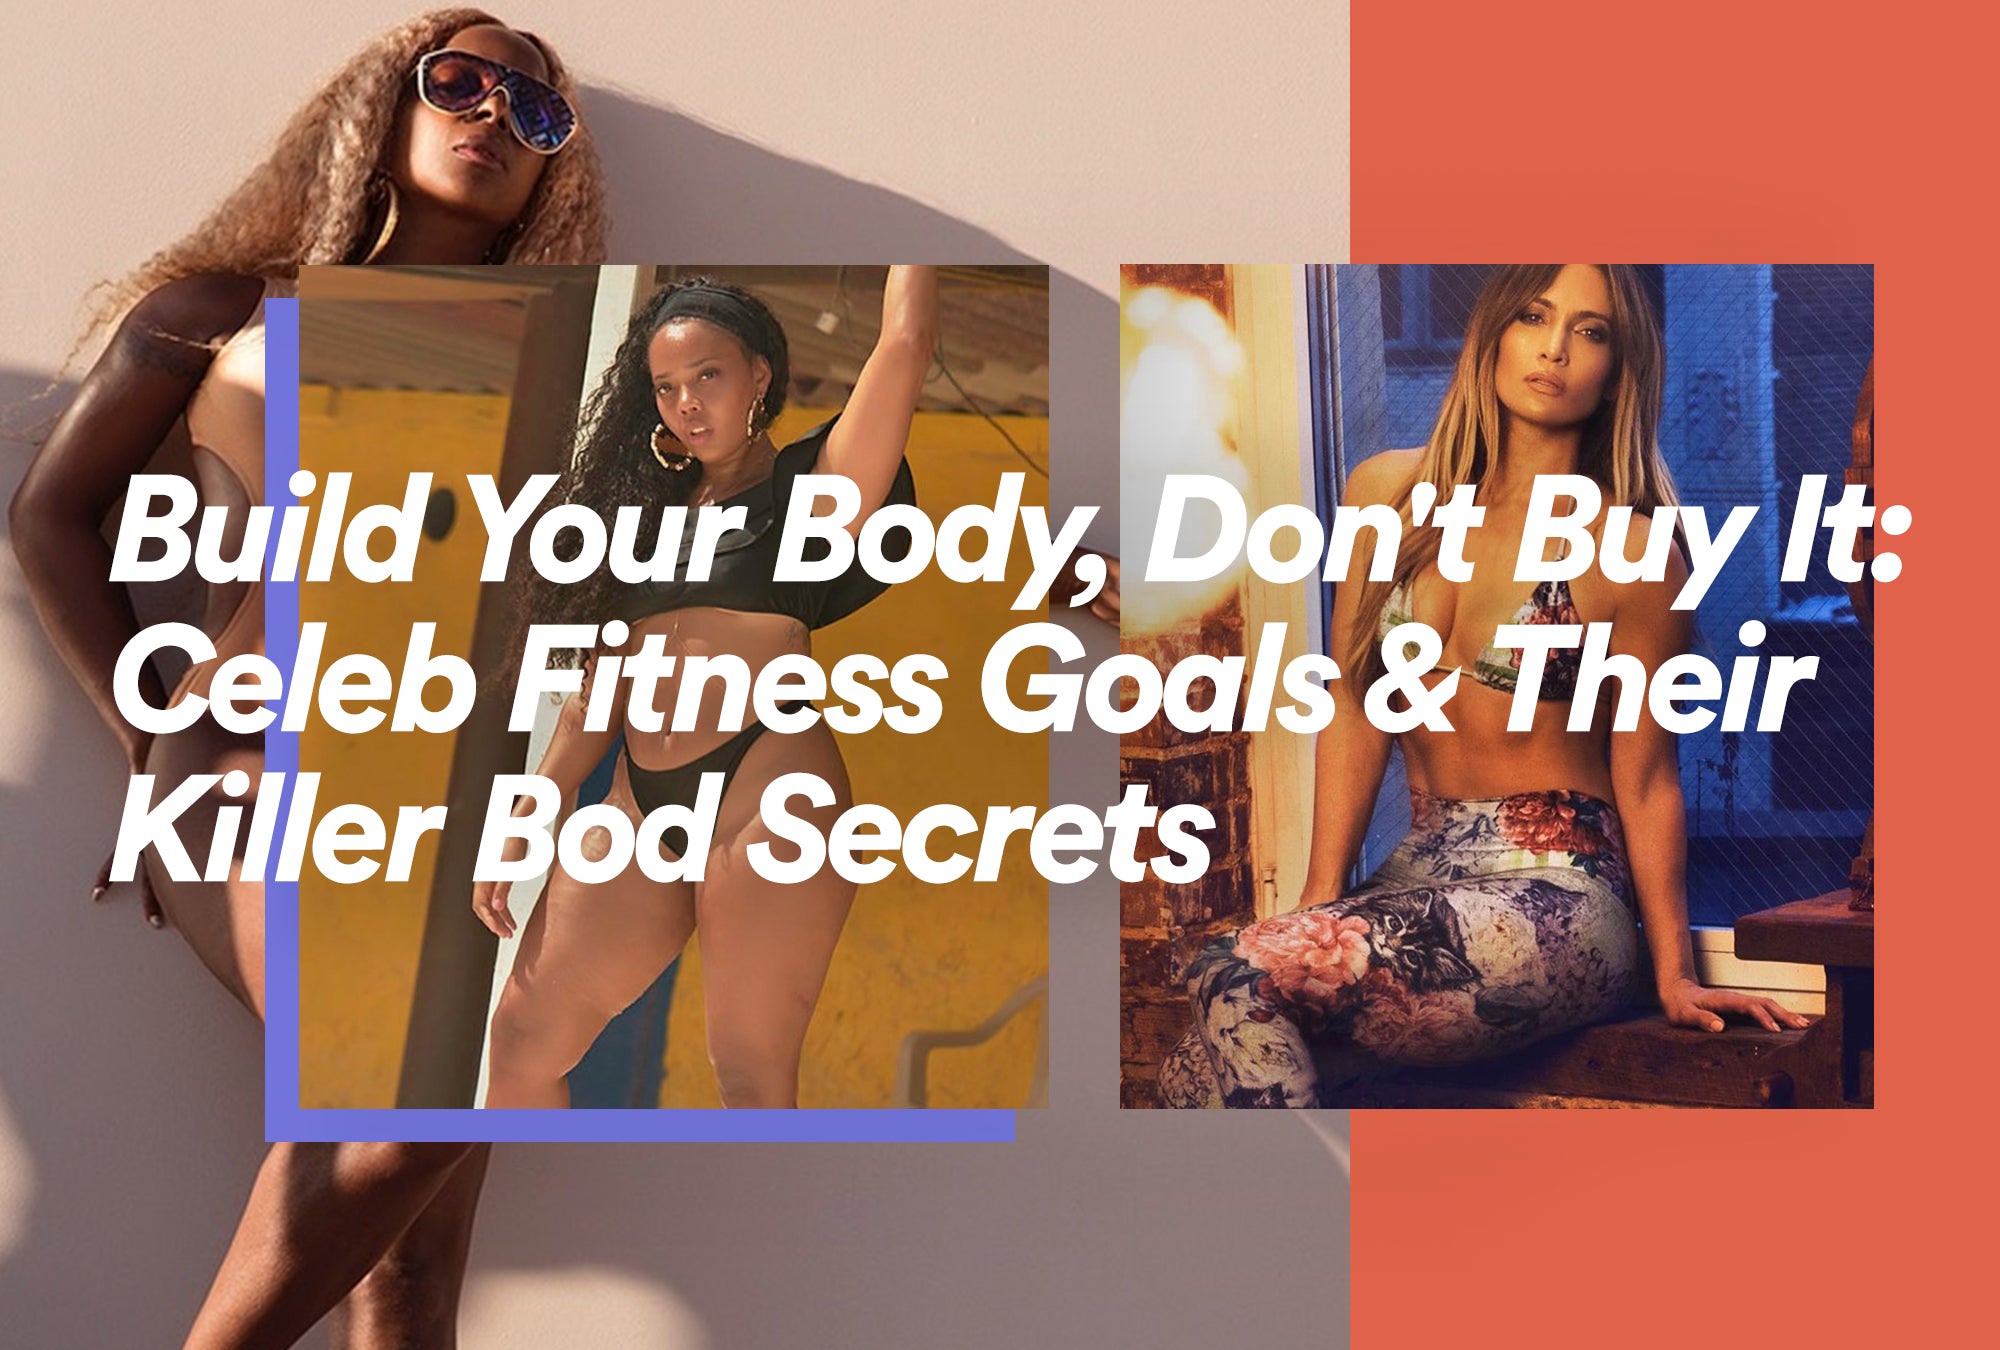 Celeb Fitness Goals and Their Killer Bod Secrets